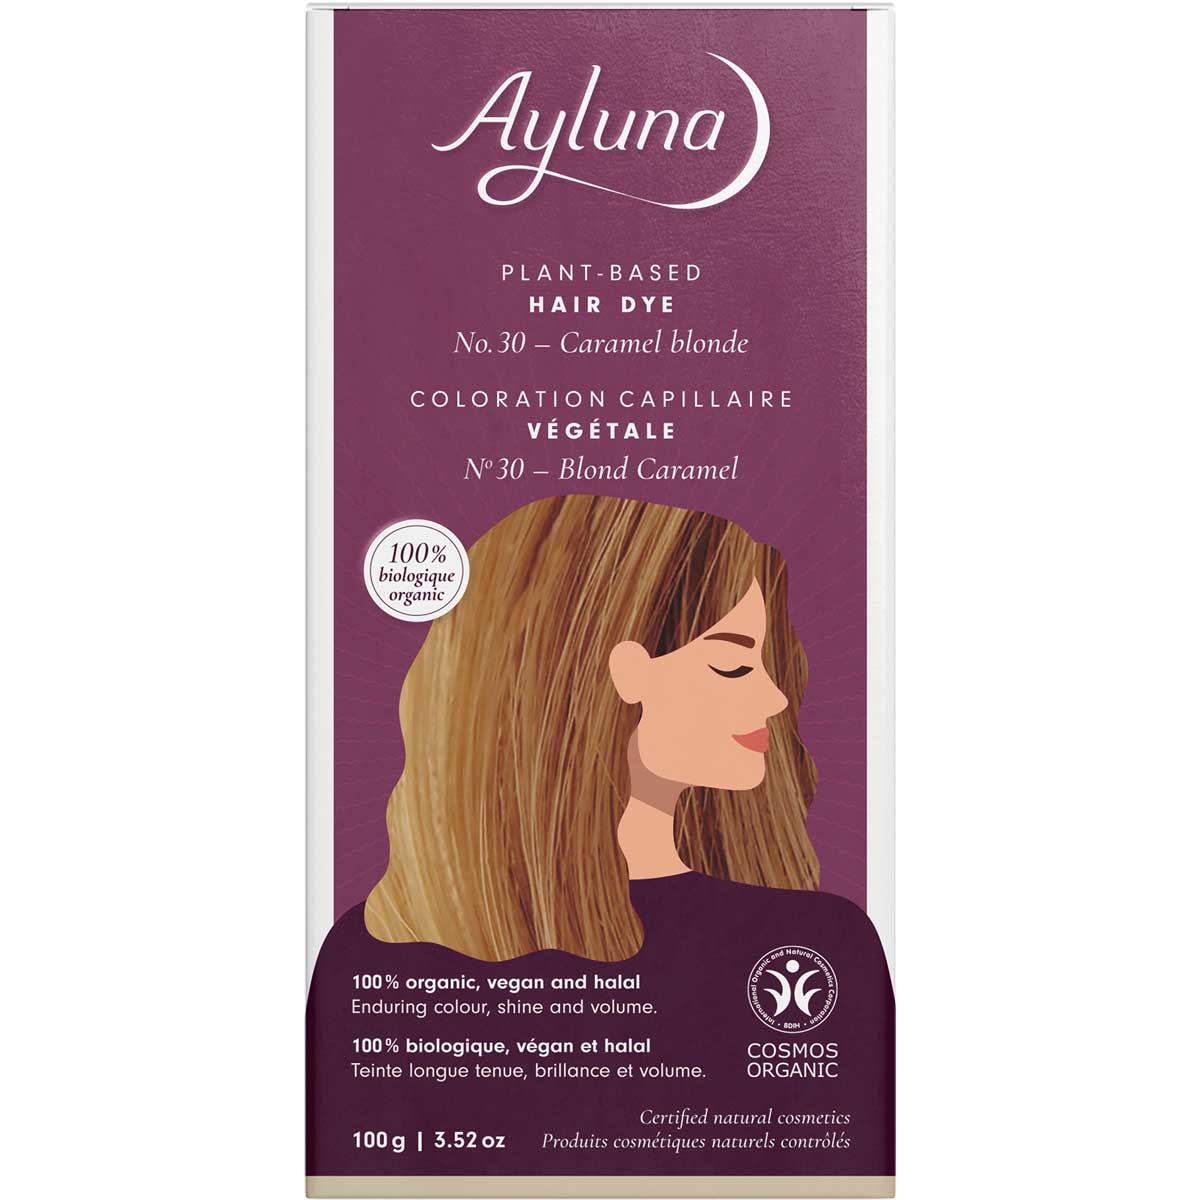 Ayluna Caramel Blonde No.30 Plant-Based Hair Dye 100g